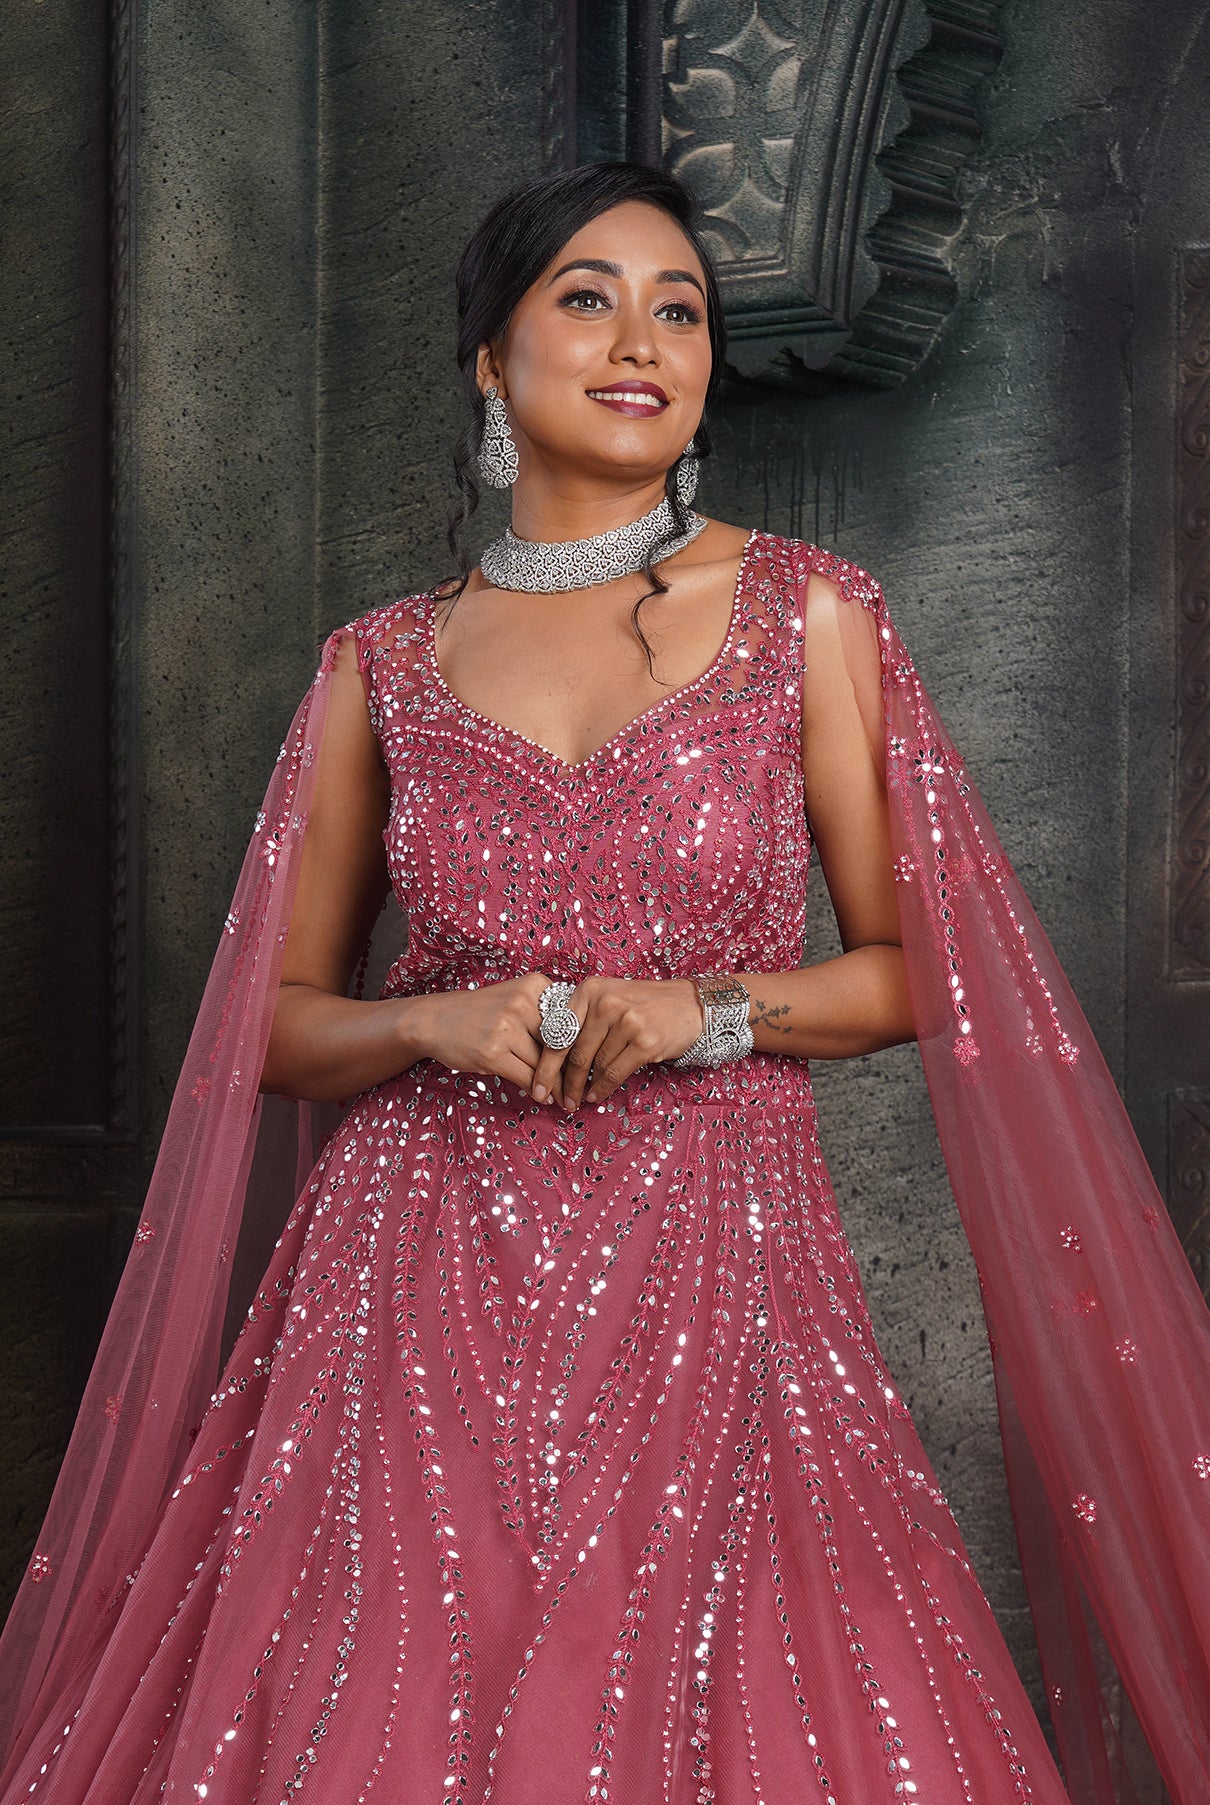 Karishma Tanna's bridal look in pink lehenga | Bridal looks, Indian bridal  photos, Bride